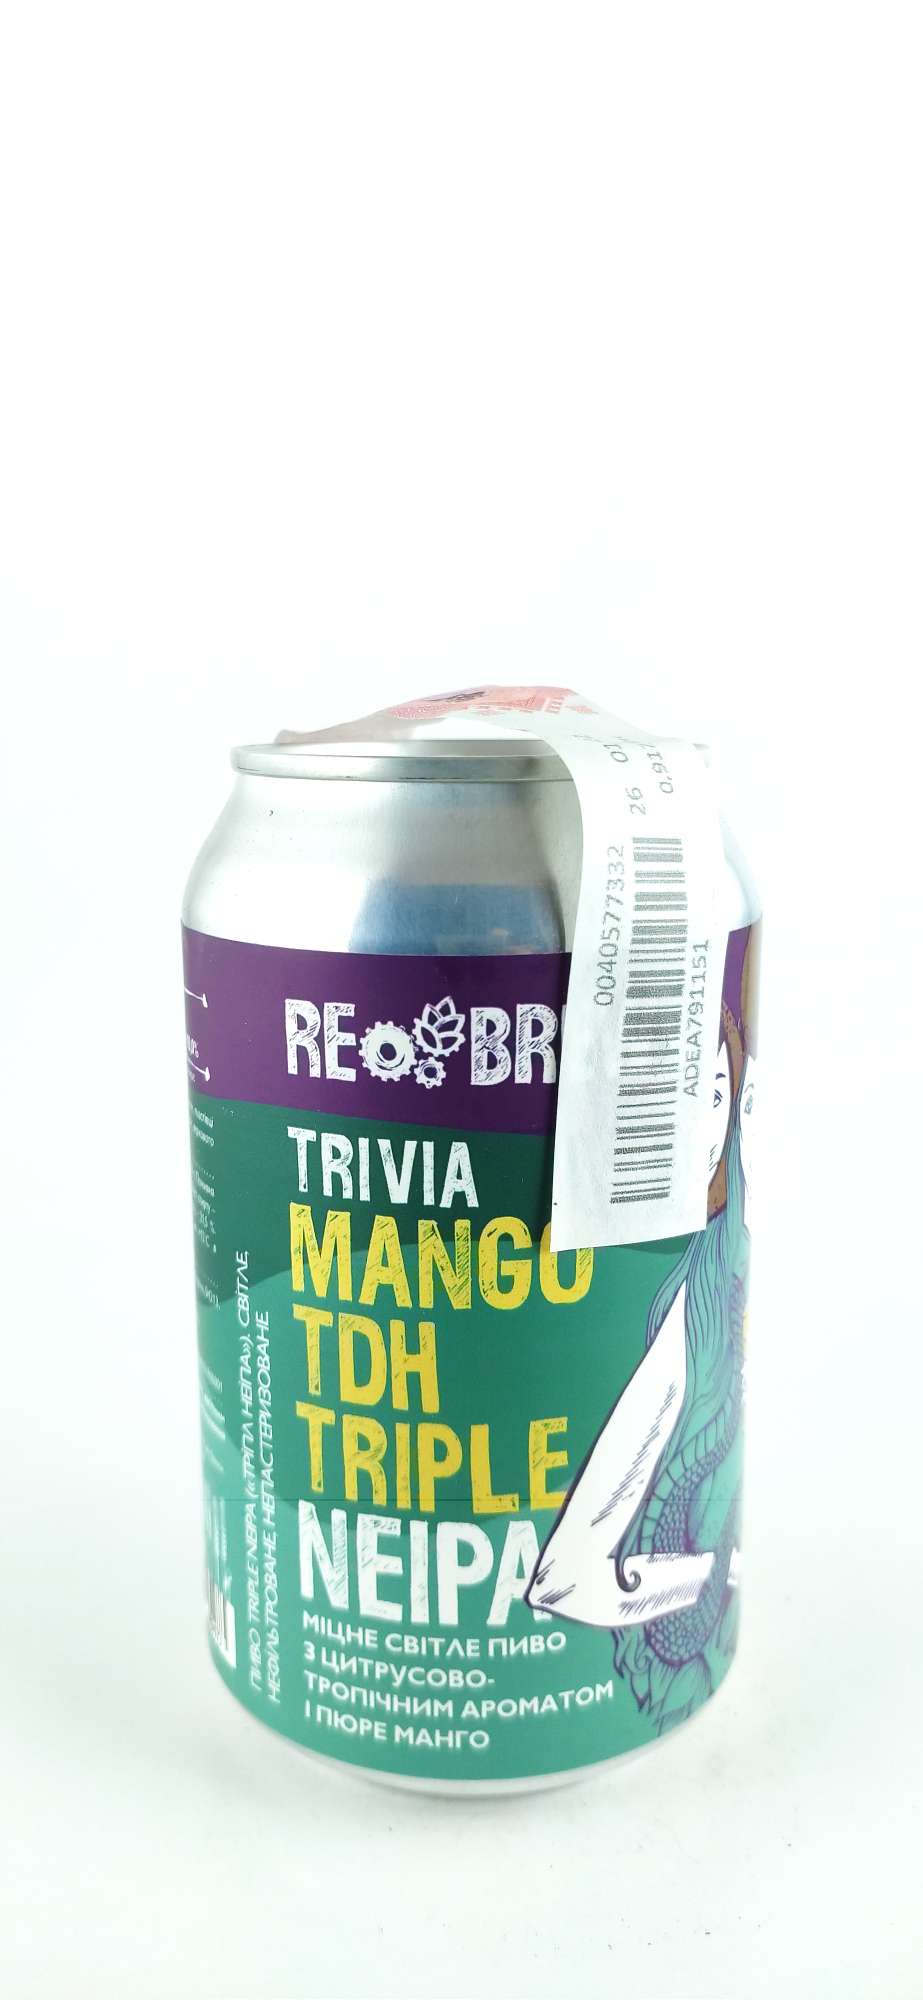 Rebrew Trivia Mango TDH Triple NEIPA 22°